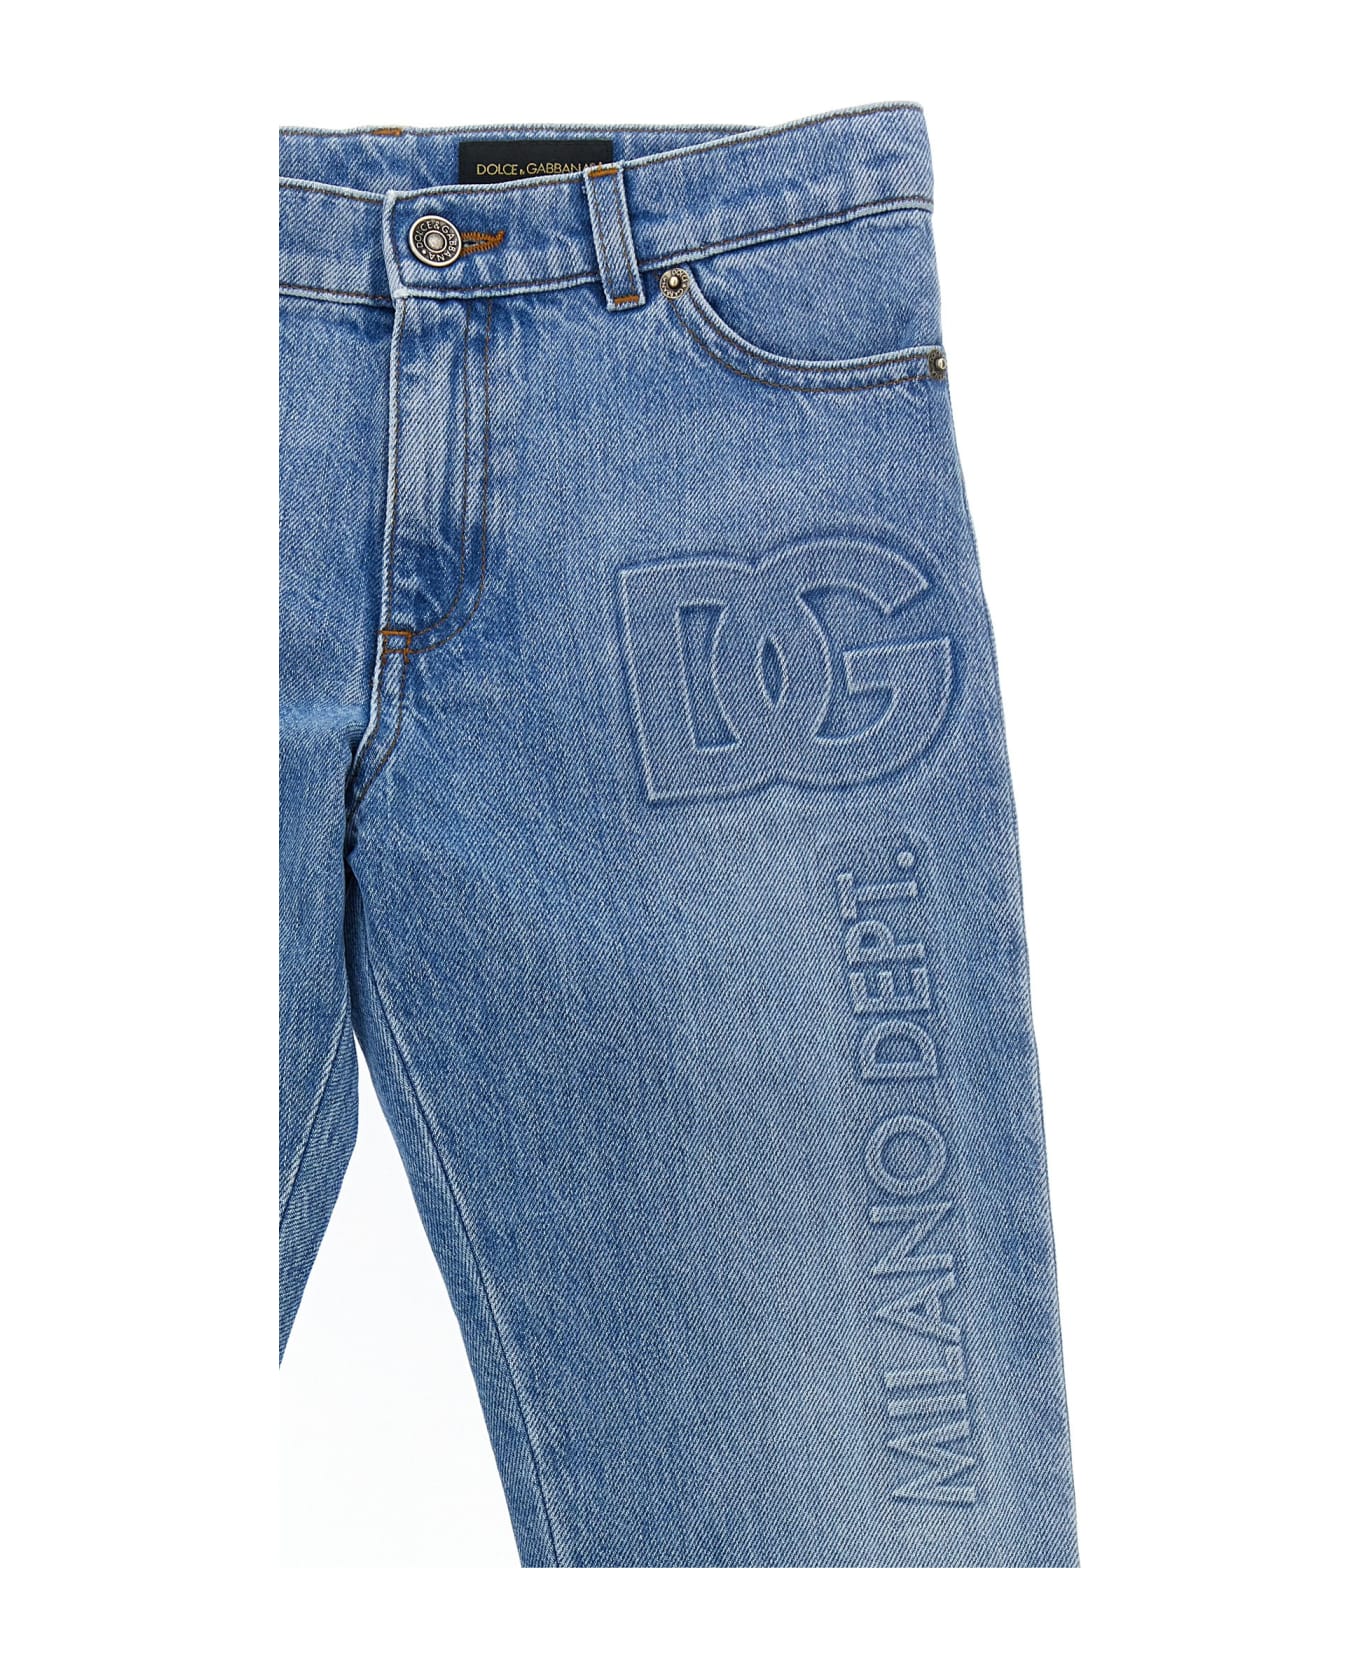 Dolce & Gabbana Logo Jeans - Light Blue